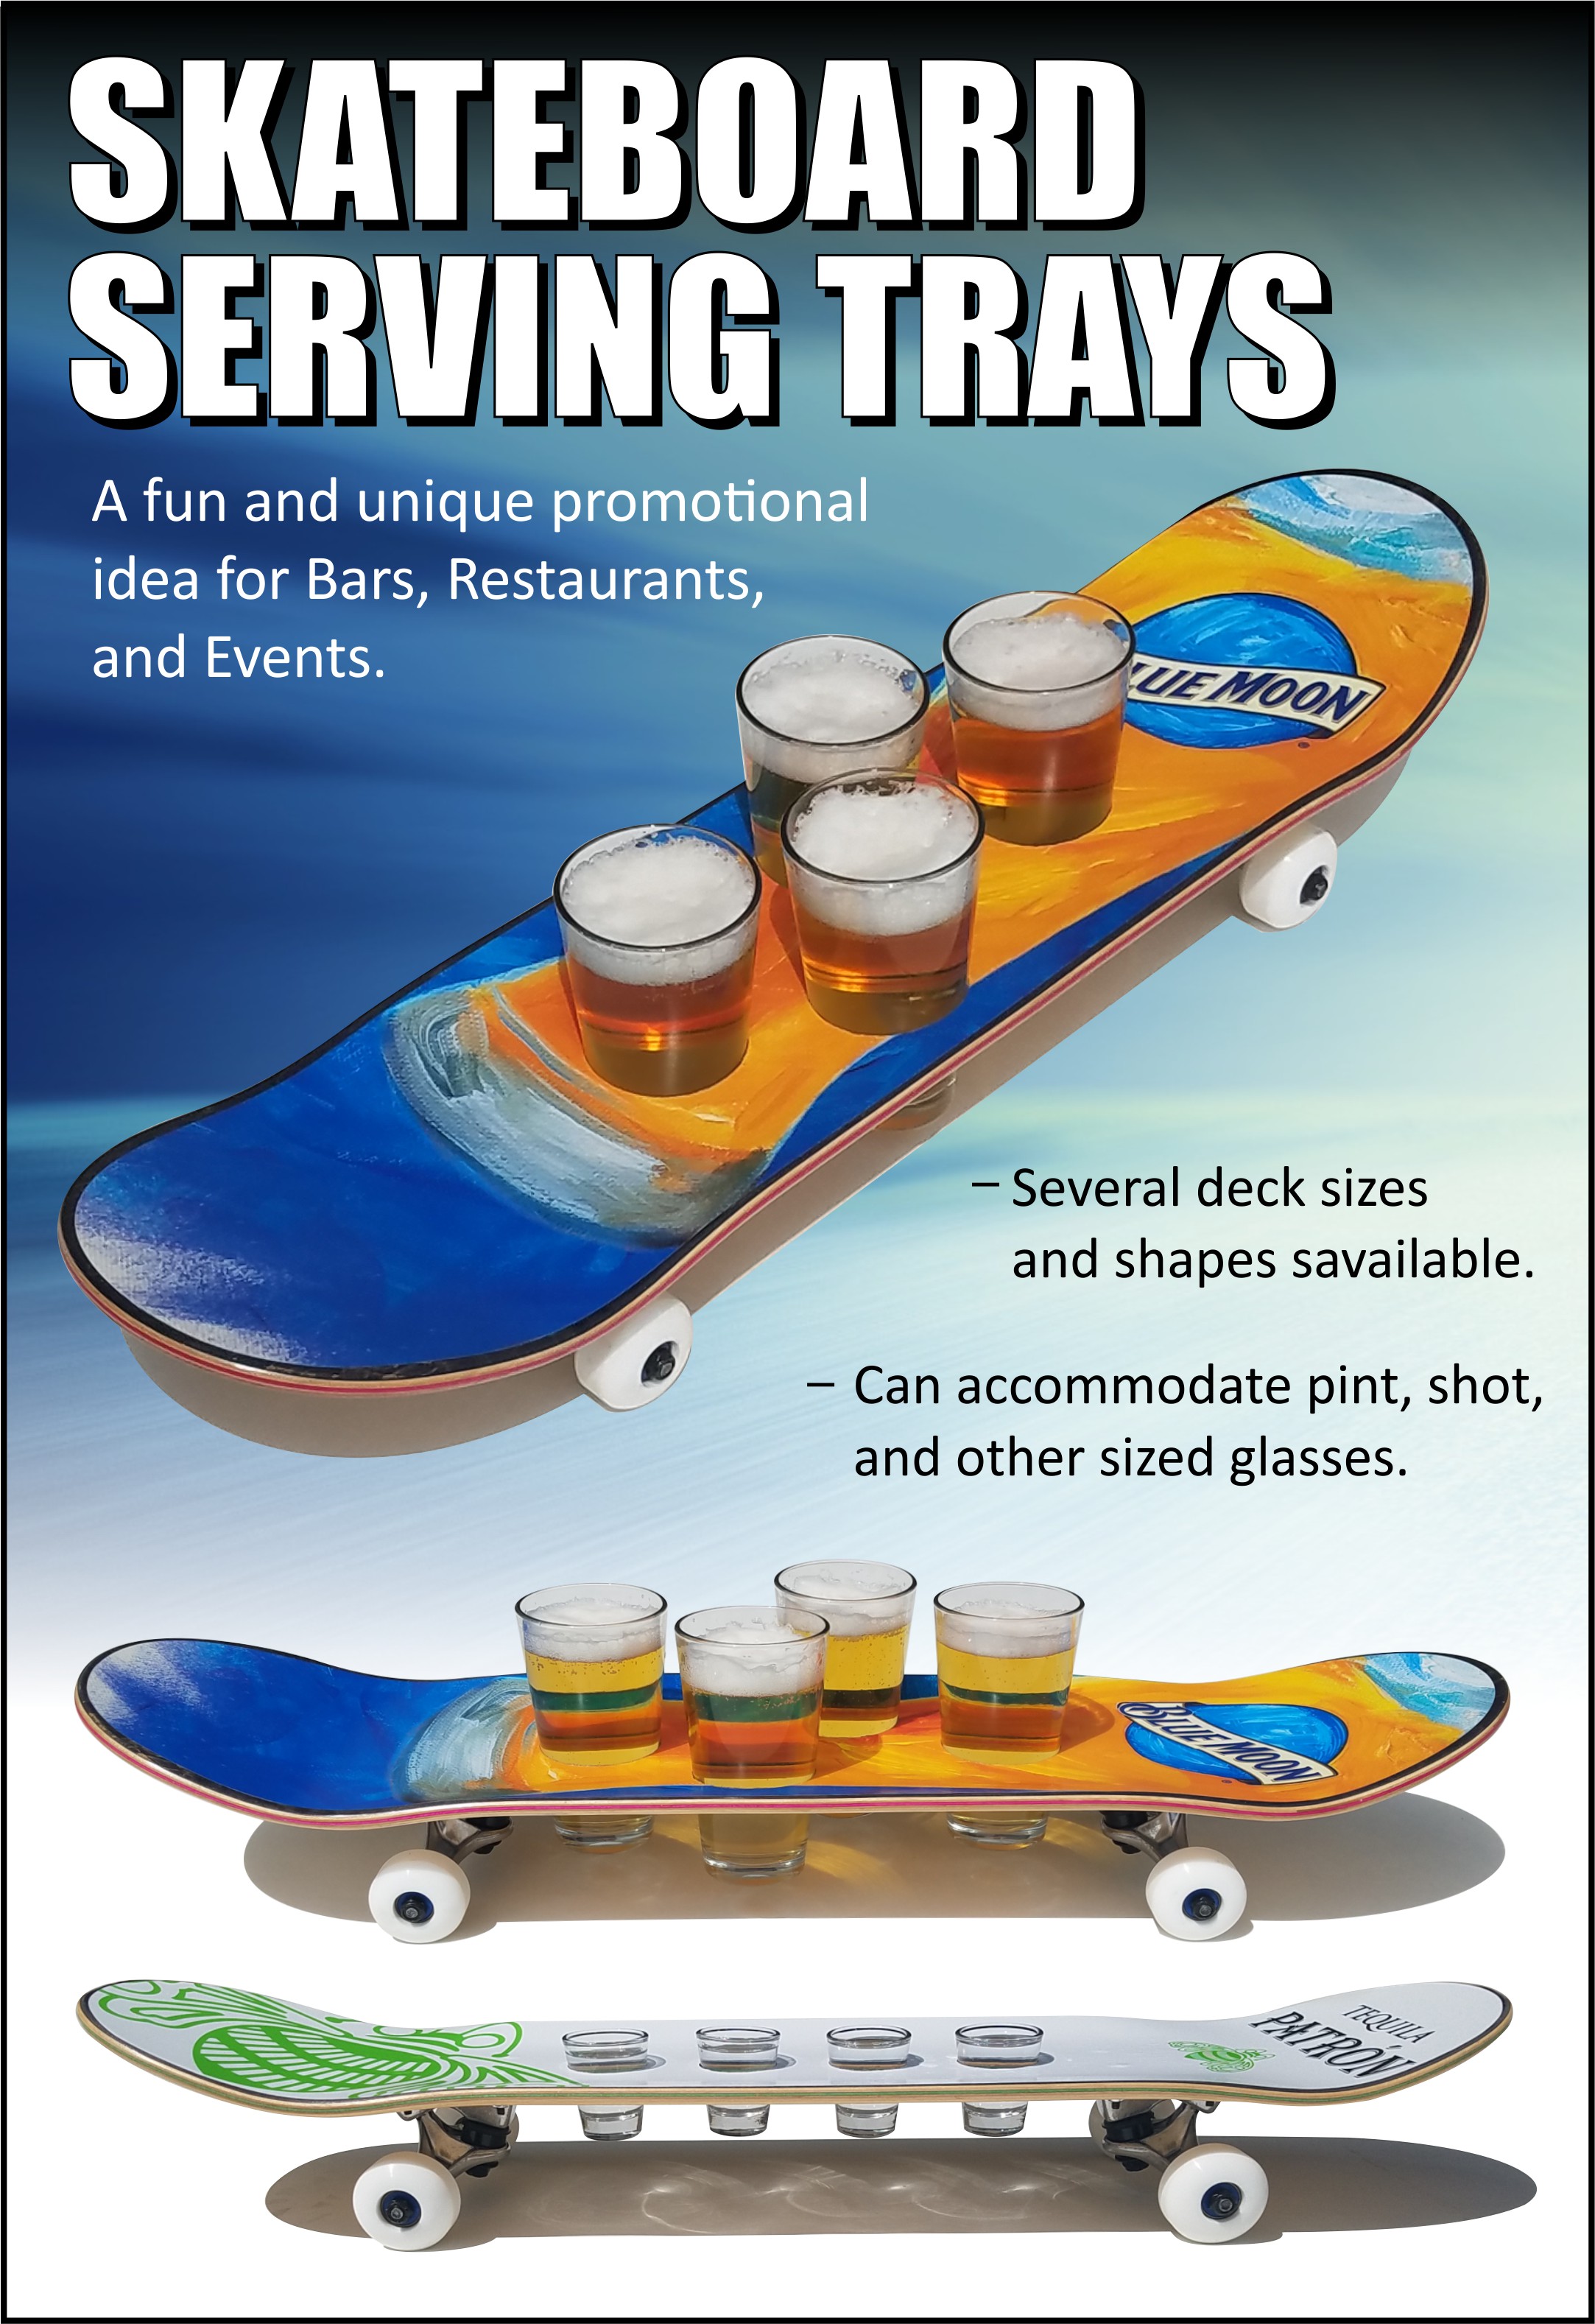 Serving Skateboards - Product Sheet.jpg